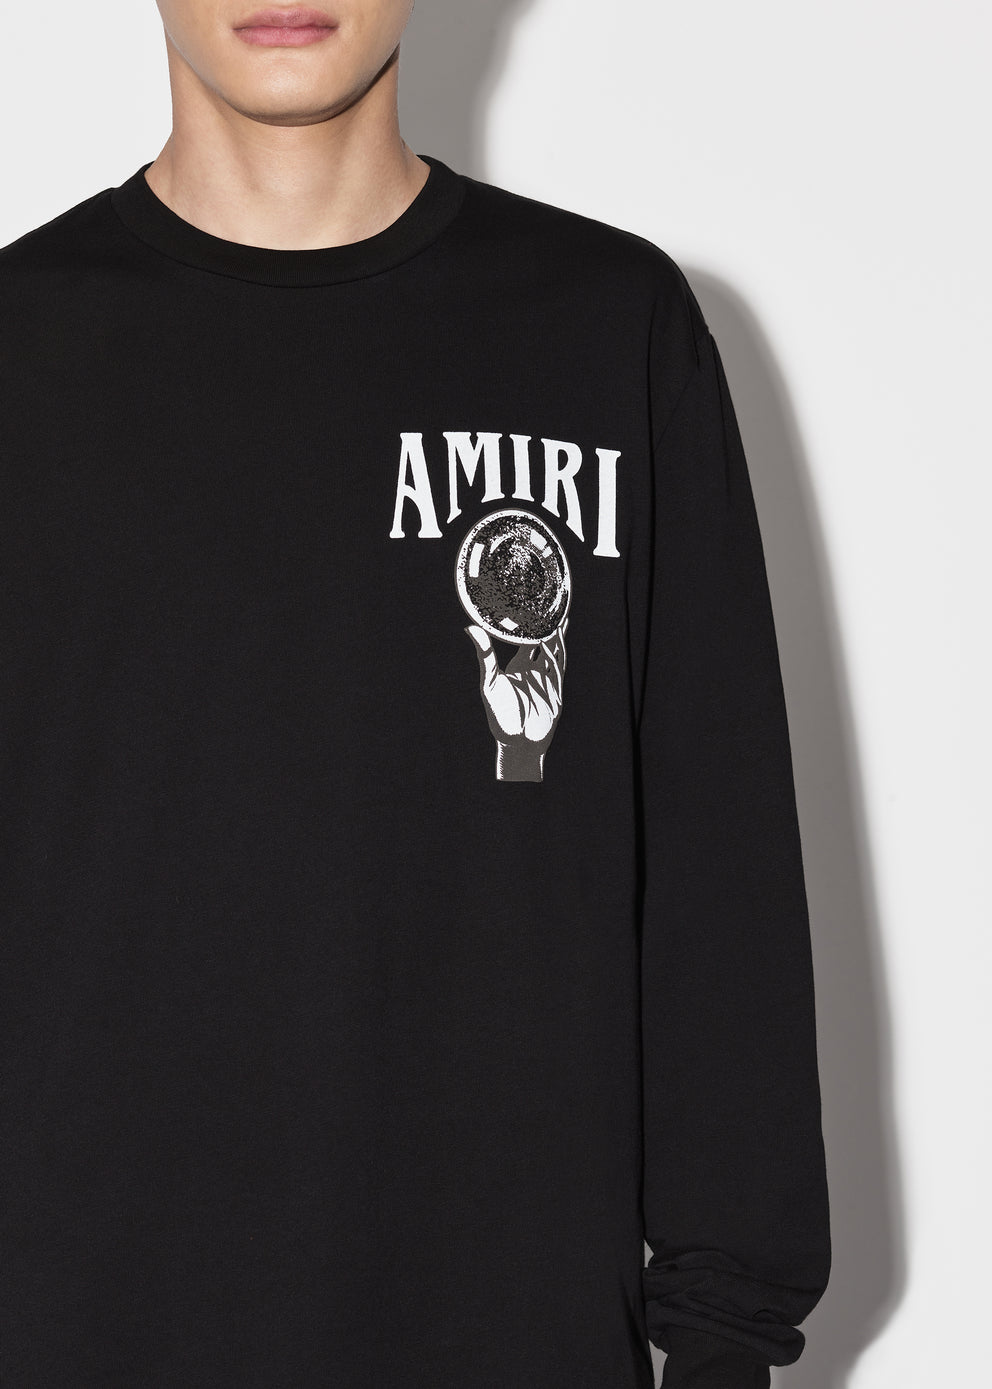 Camisas Amiri Crystal Ball Long Sleeve Hombre Negras | 5904EABKV